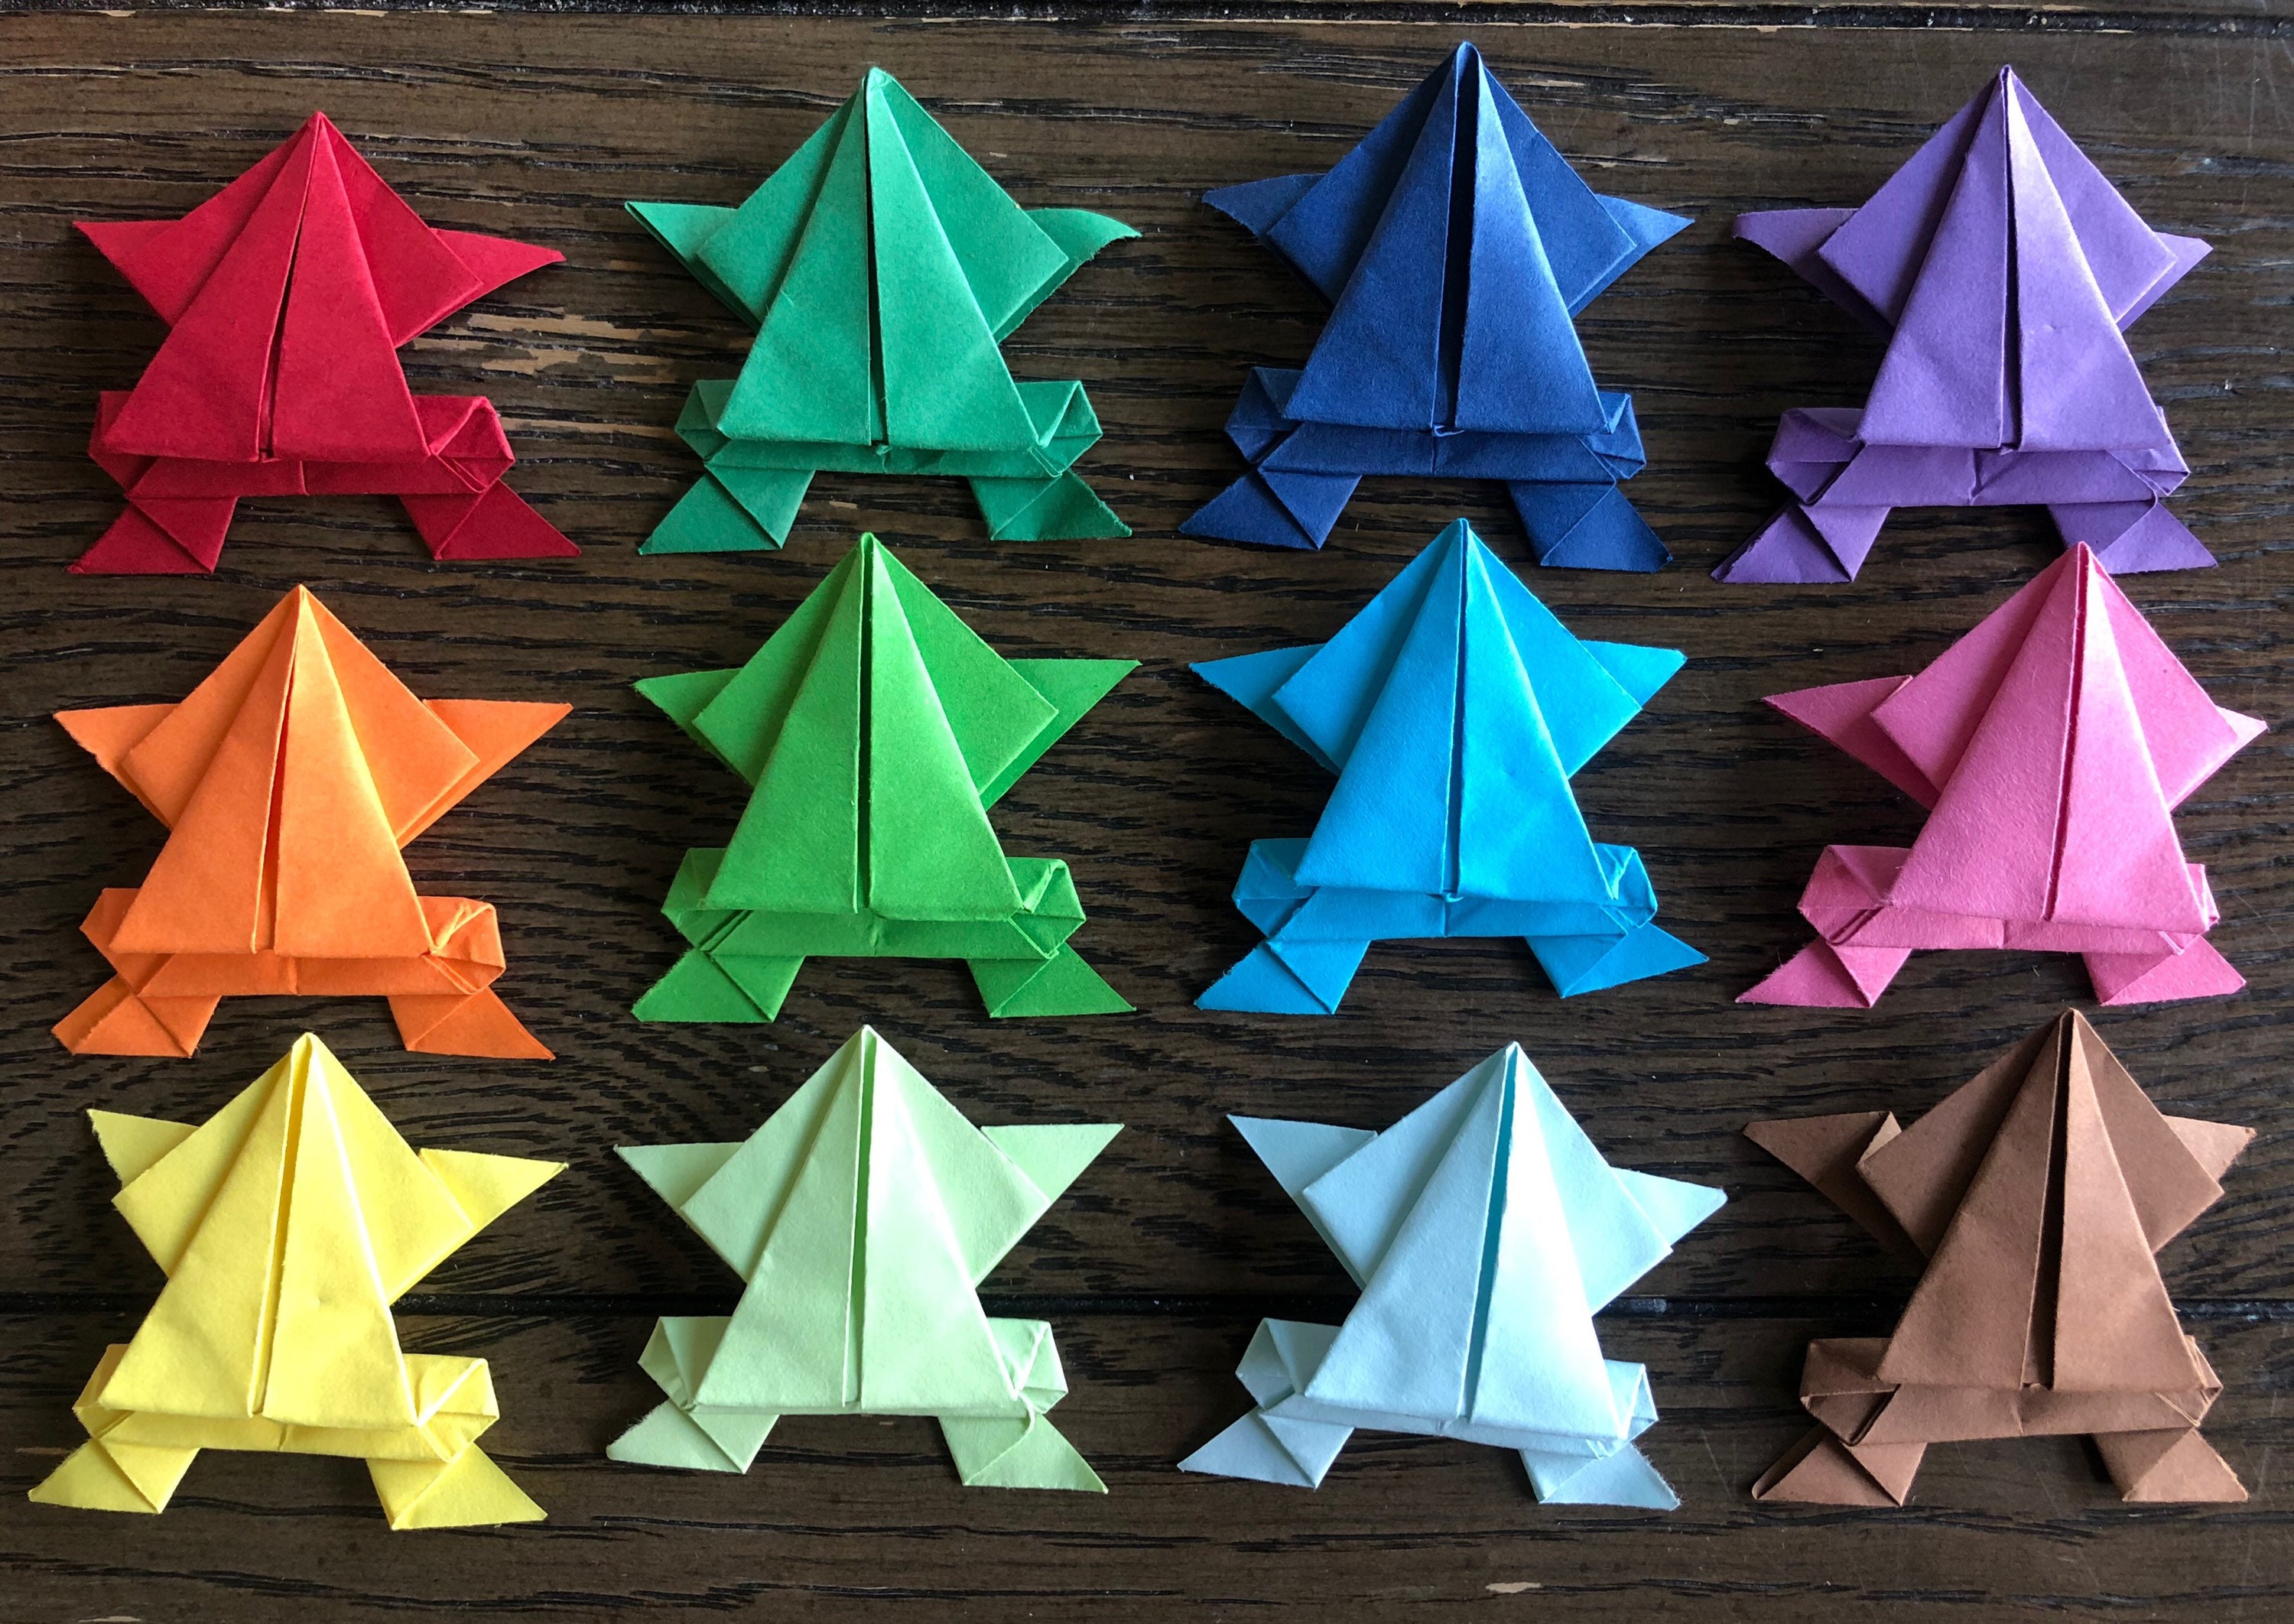 Two-tone Origami Paper, Square Folding 24pc Multi Color/pack